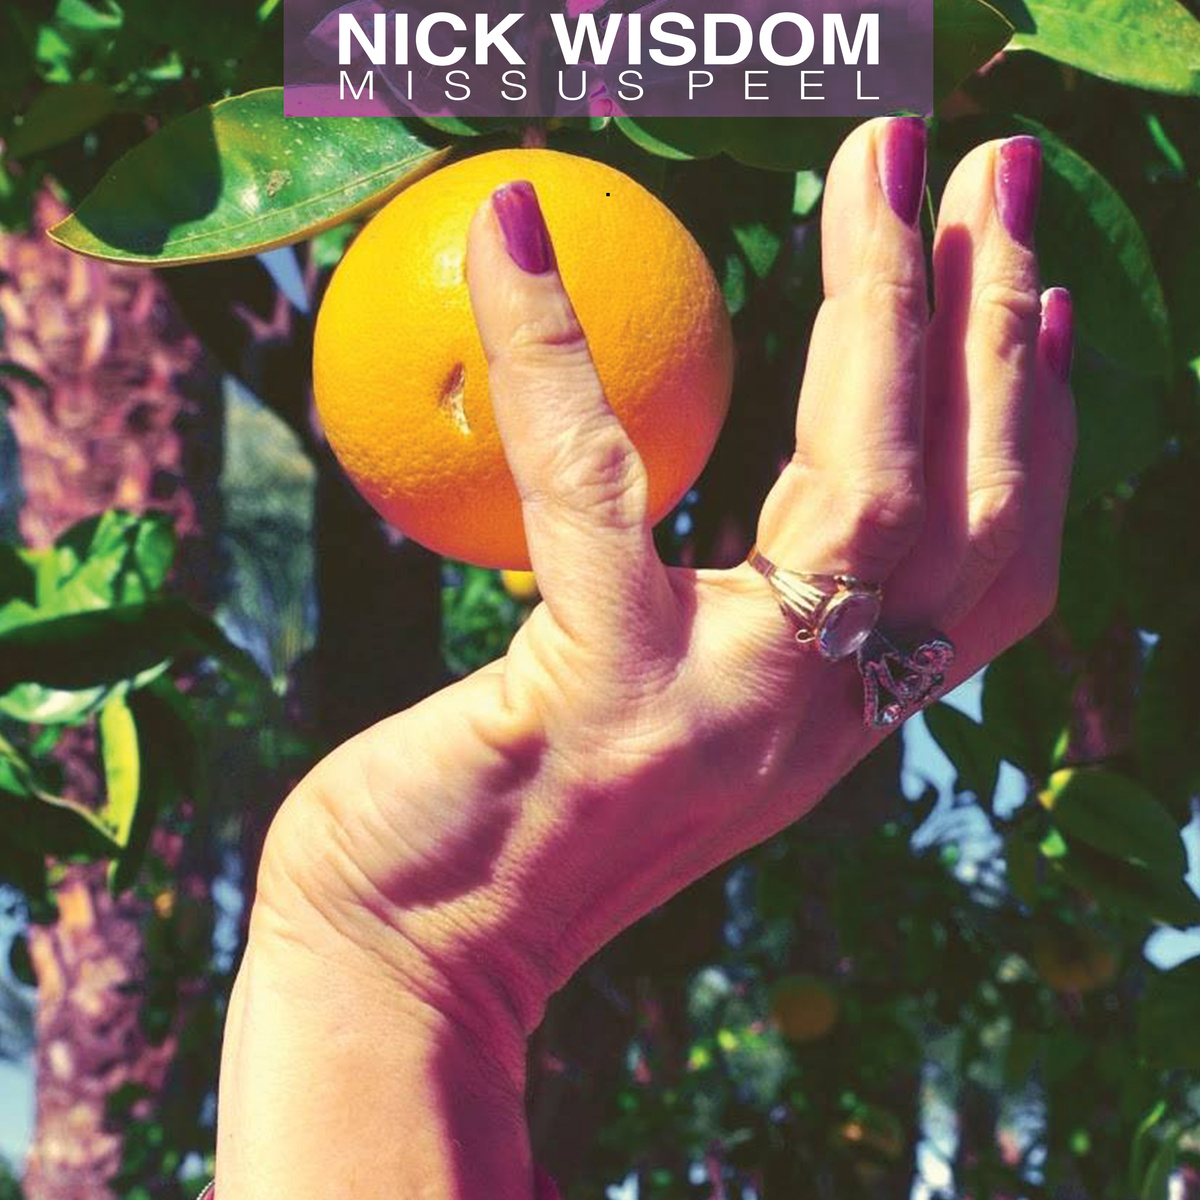 Free Download: Nick Wisdom – Missus Peel